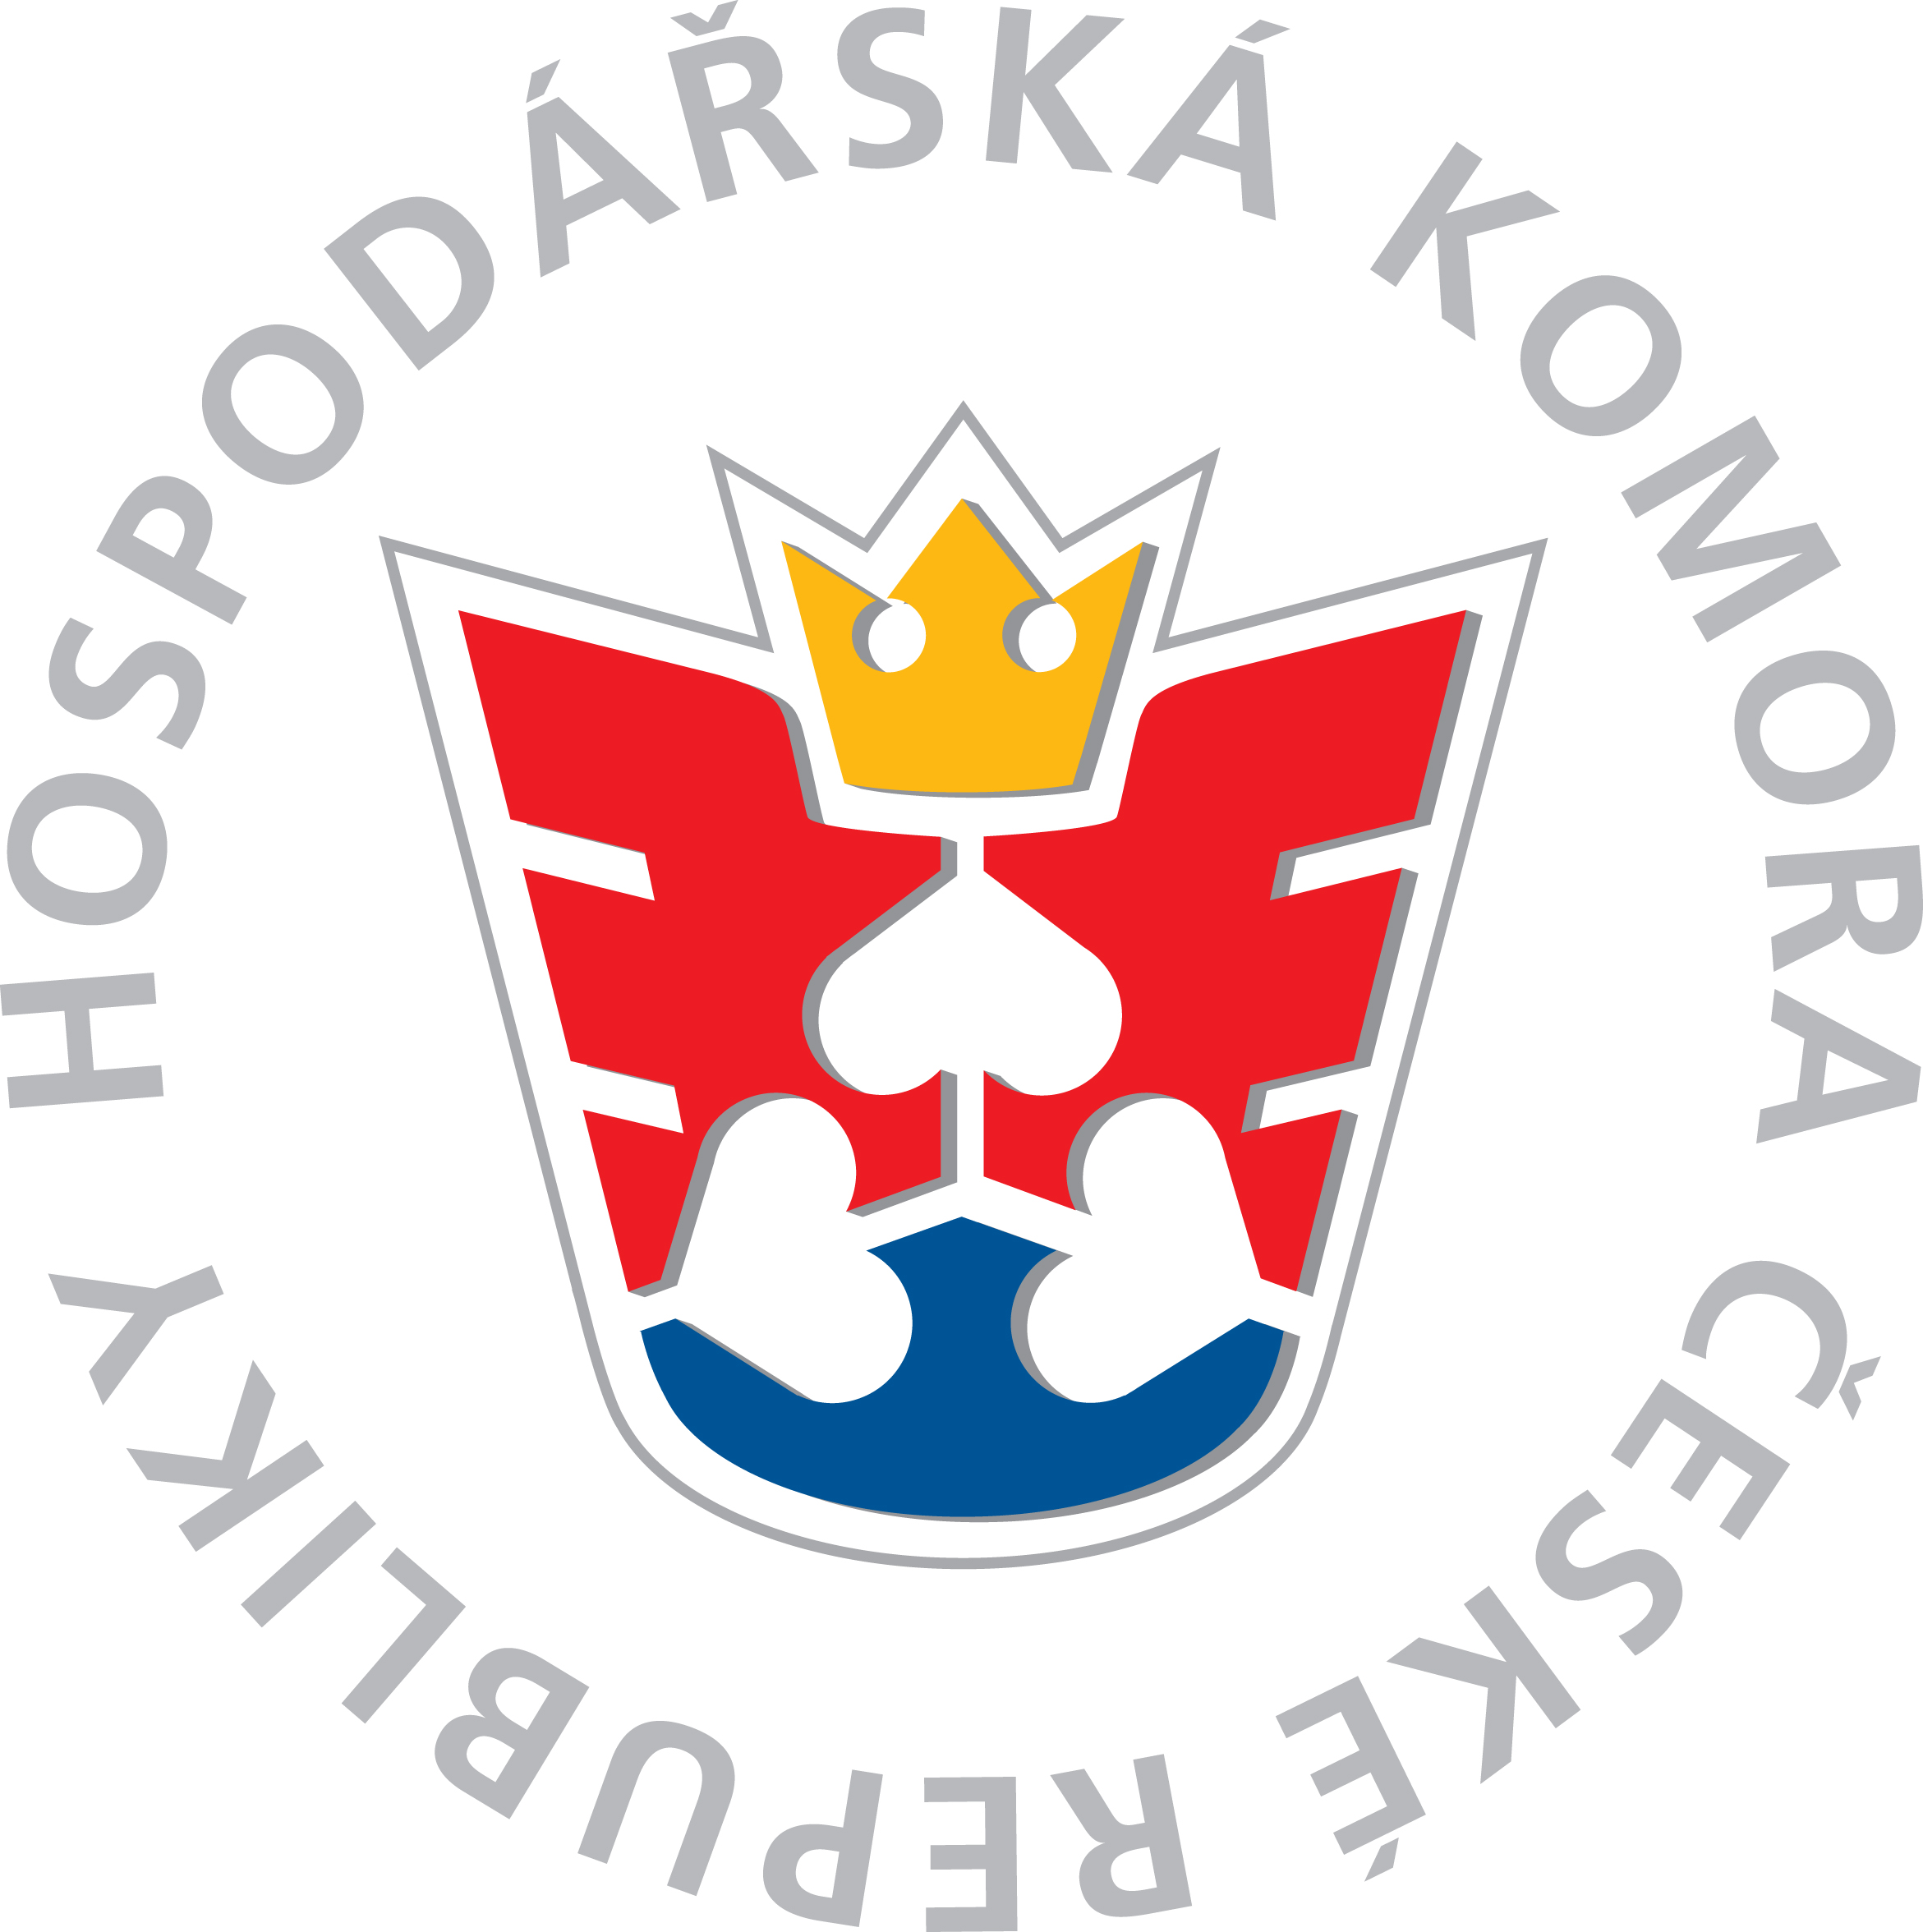 Hospodářská komora České republiky